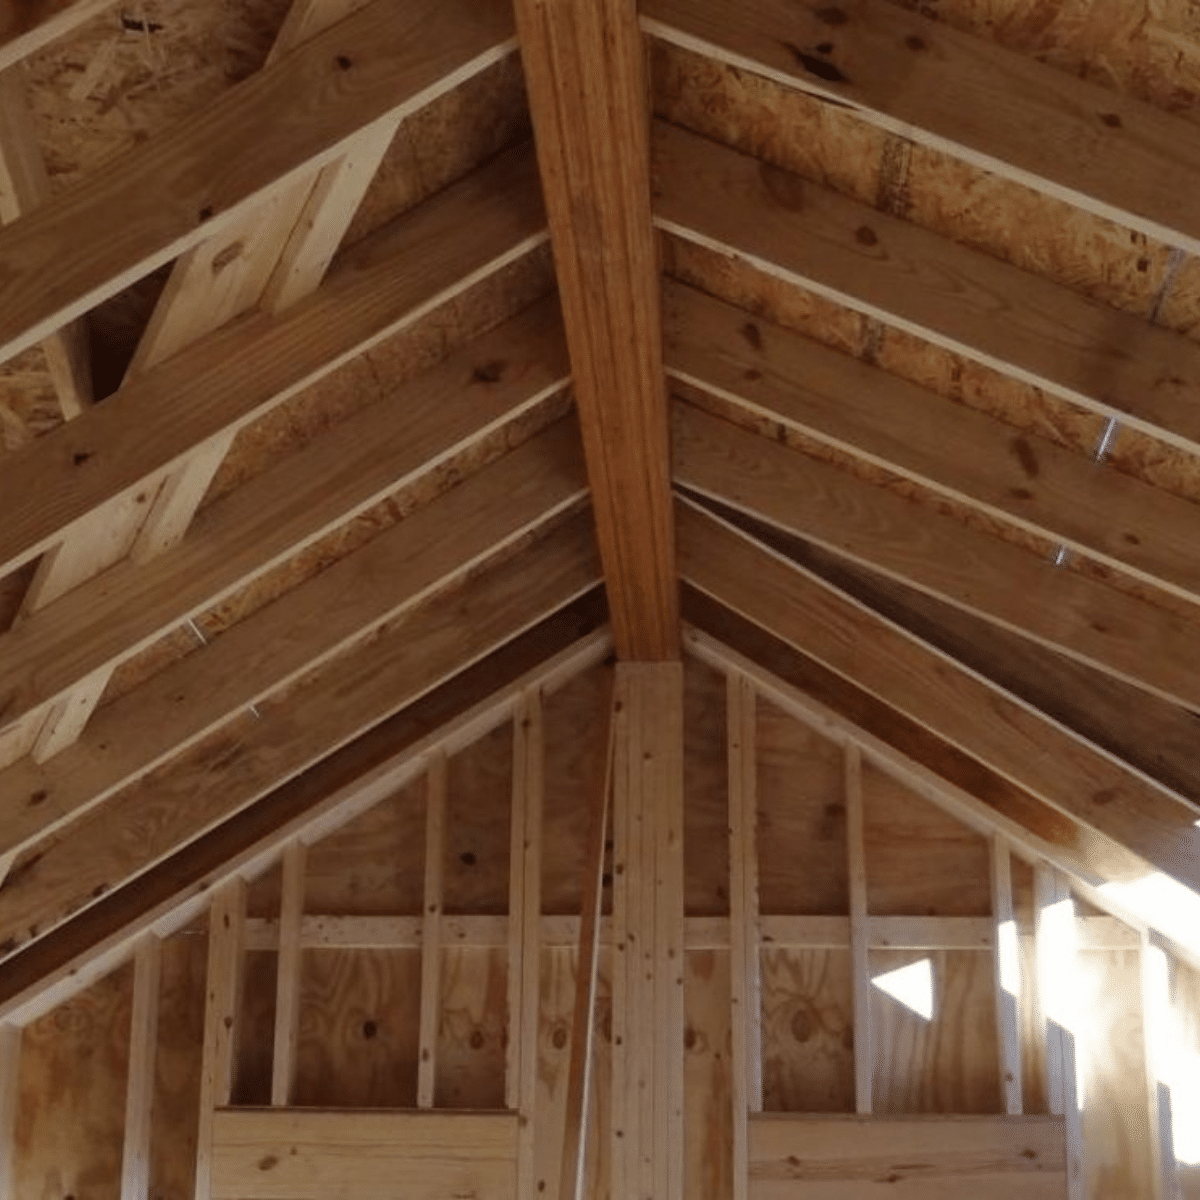 Structural Ridge Beam Log Cabin